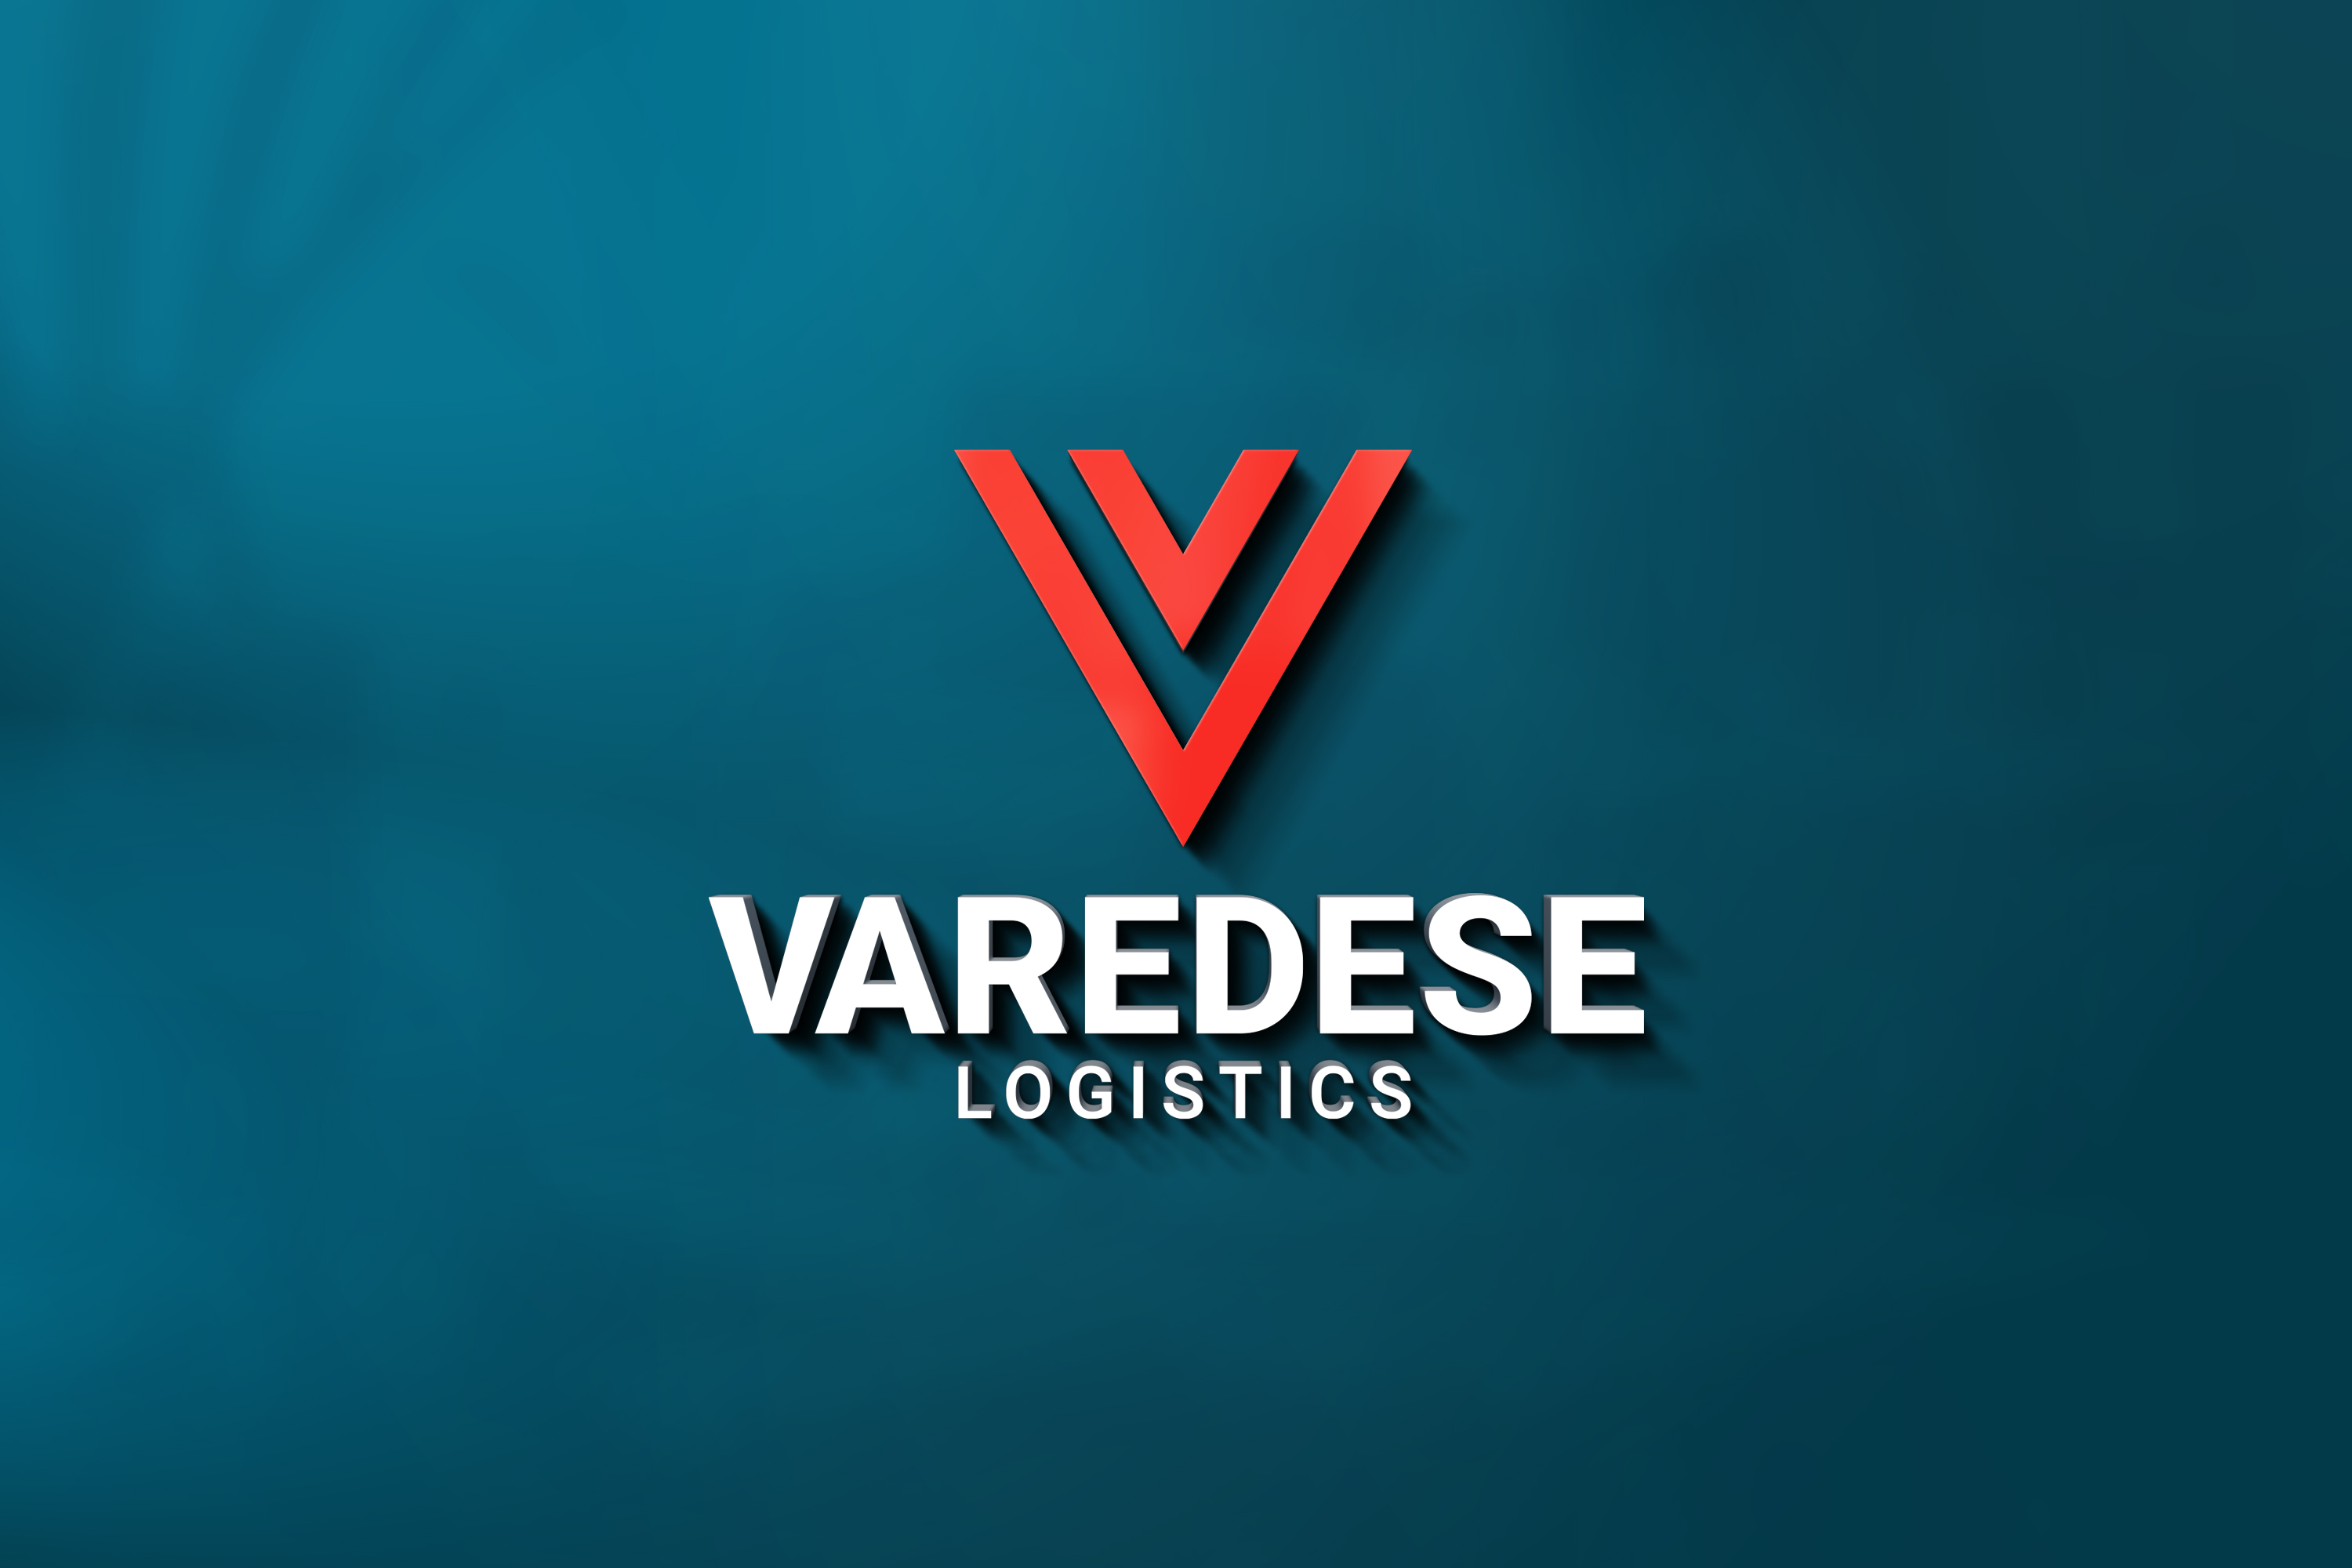 VAREDESE brand identity